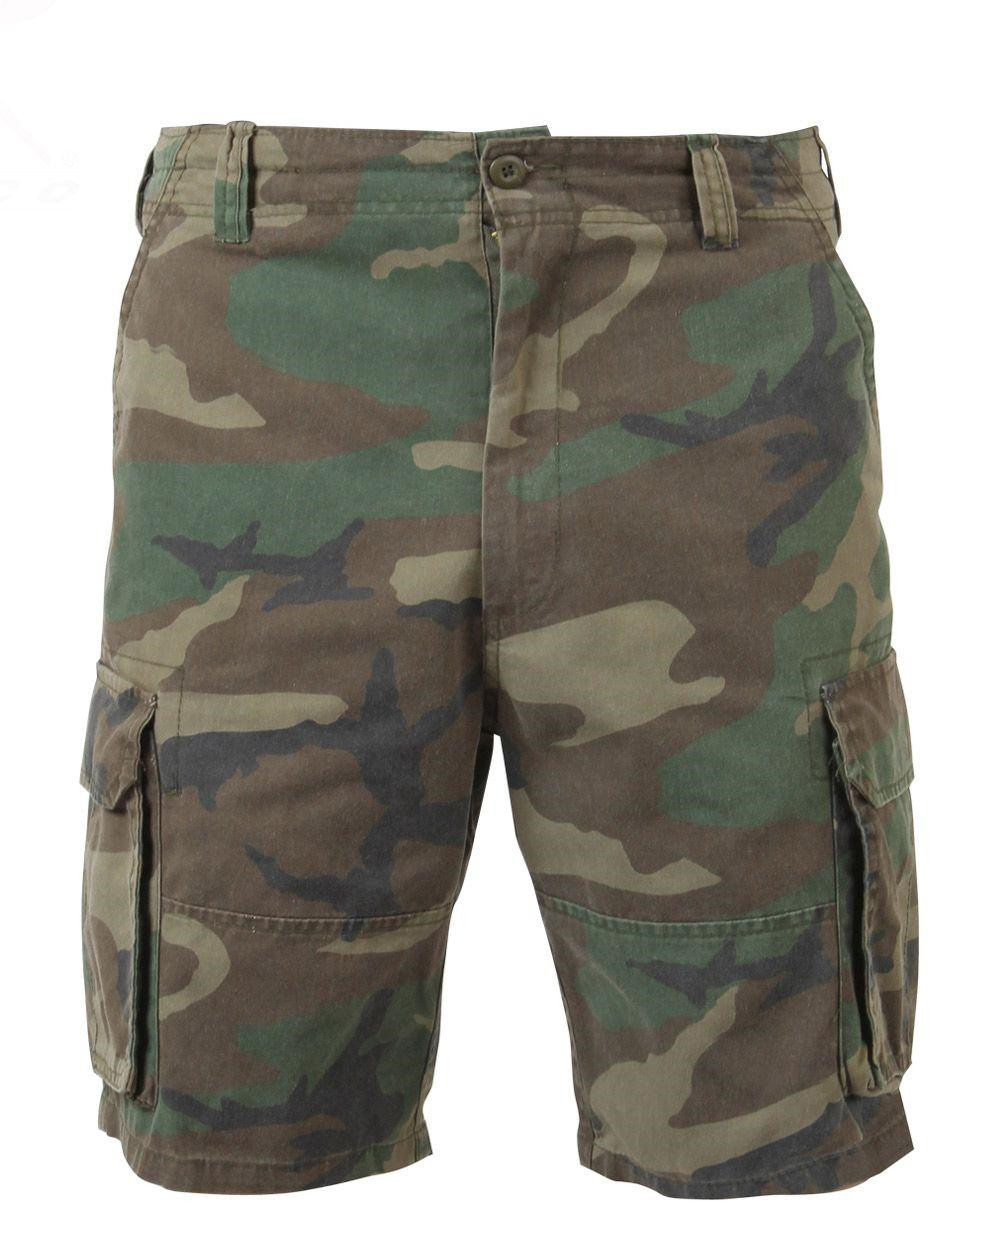 Rothco Cargo shorts (Woodland, XL)